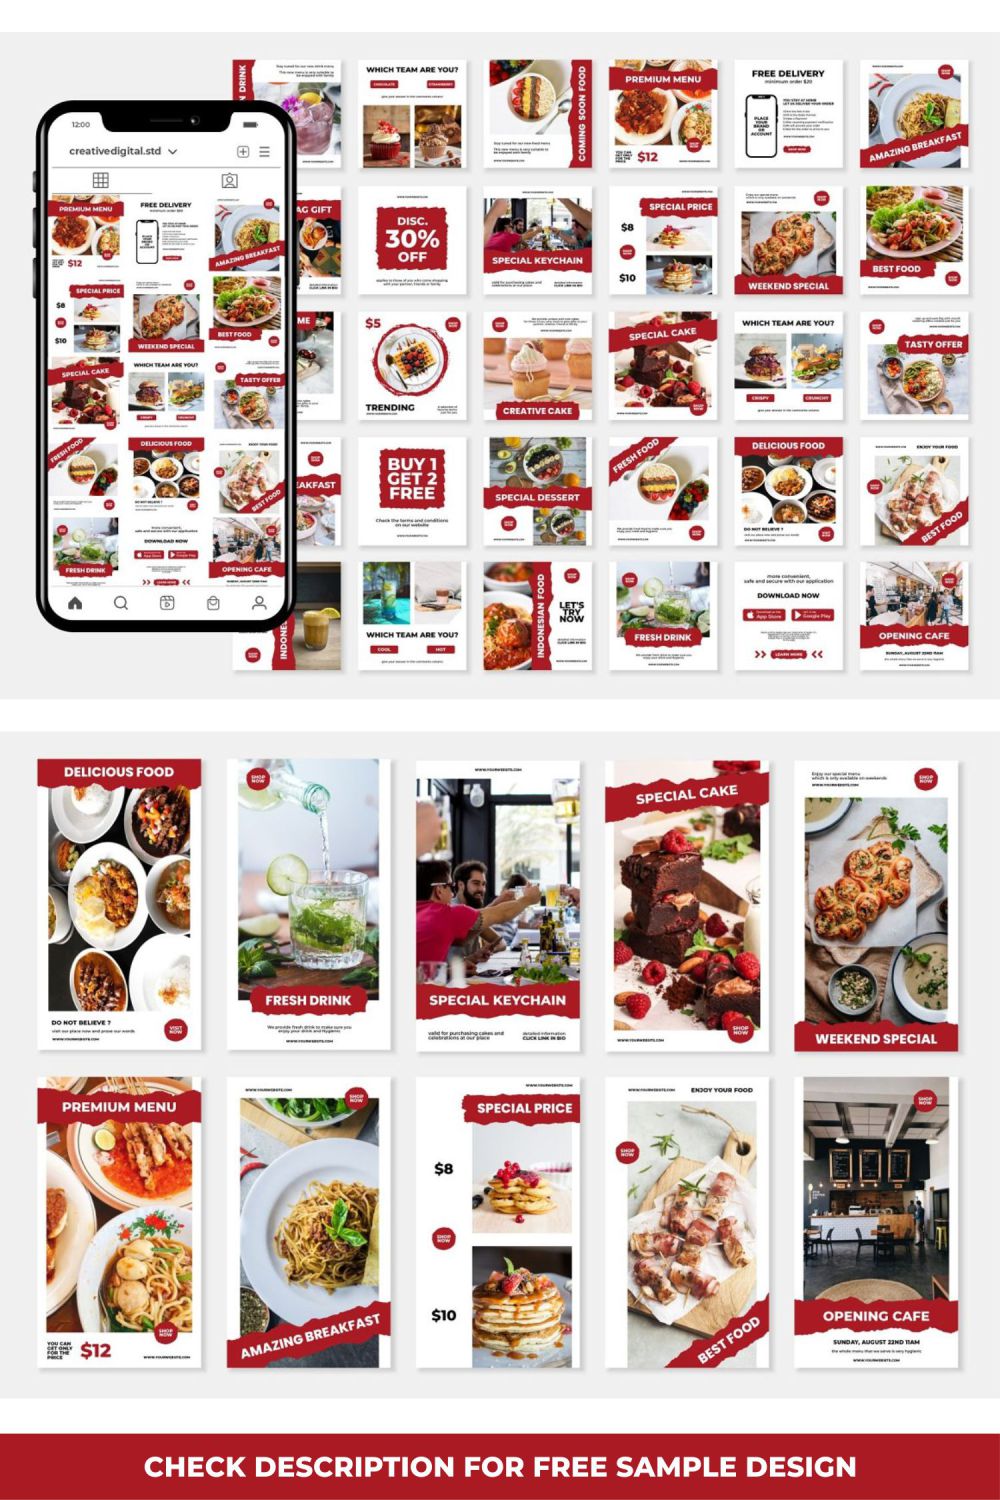 Food & Beverage Social Media Marketing Templates Pinterest Image.